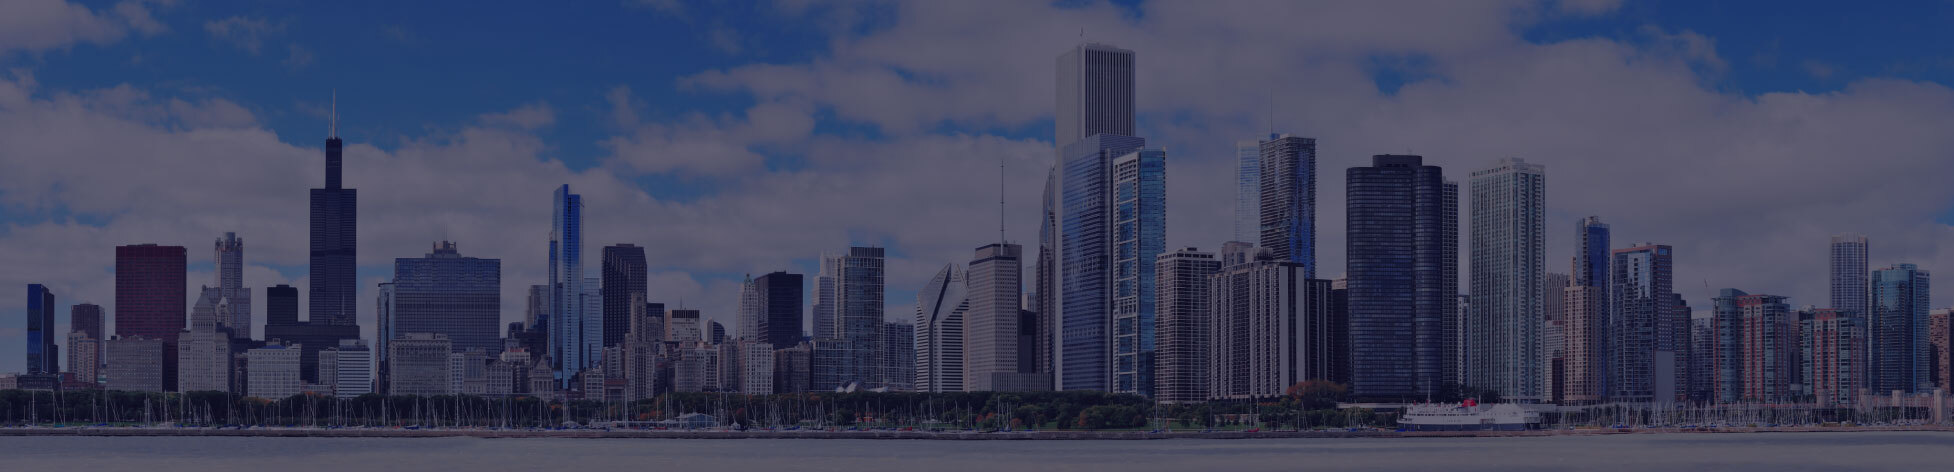 The Chicago city scape